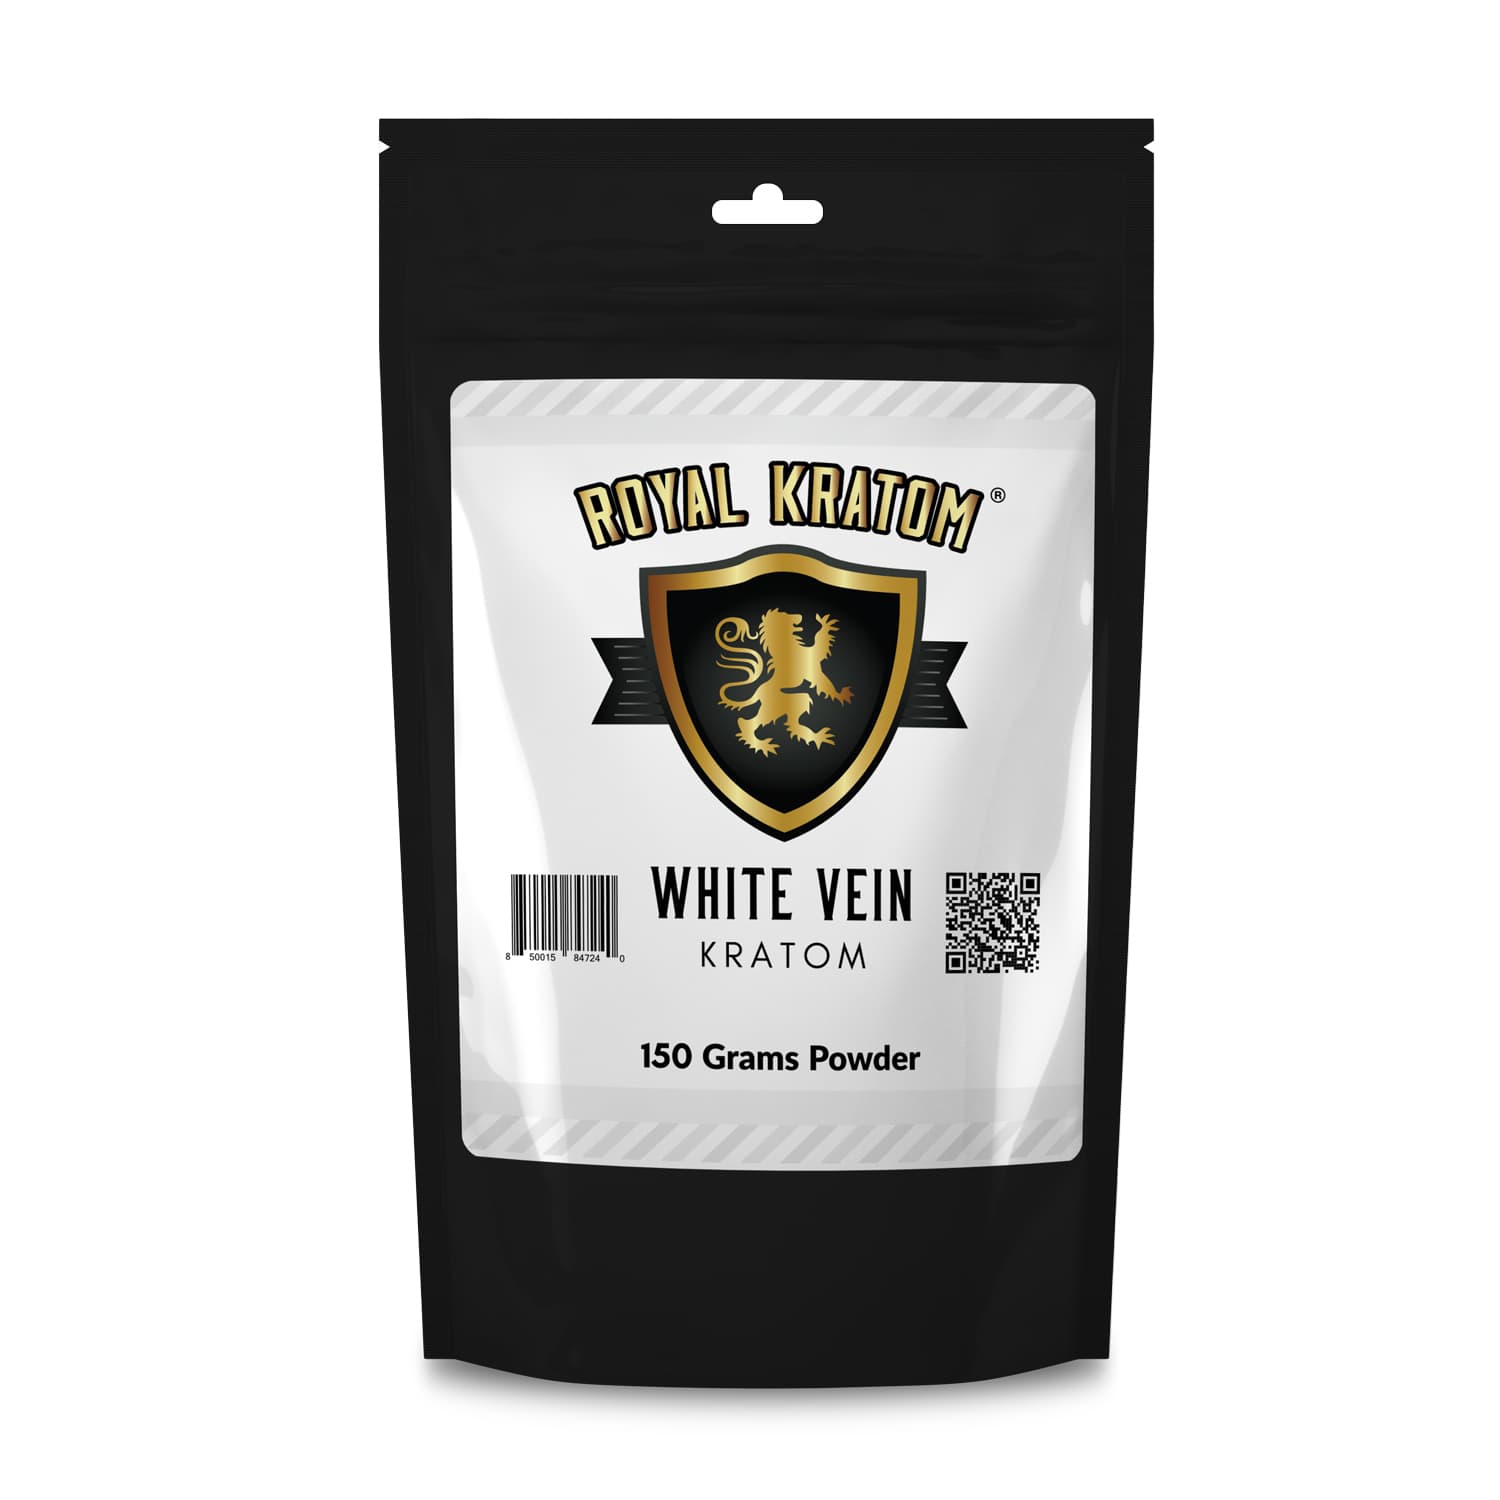 White Vein Kratom Powder 150 Grams front of package